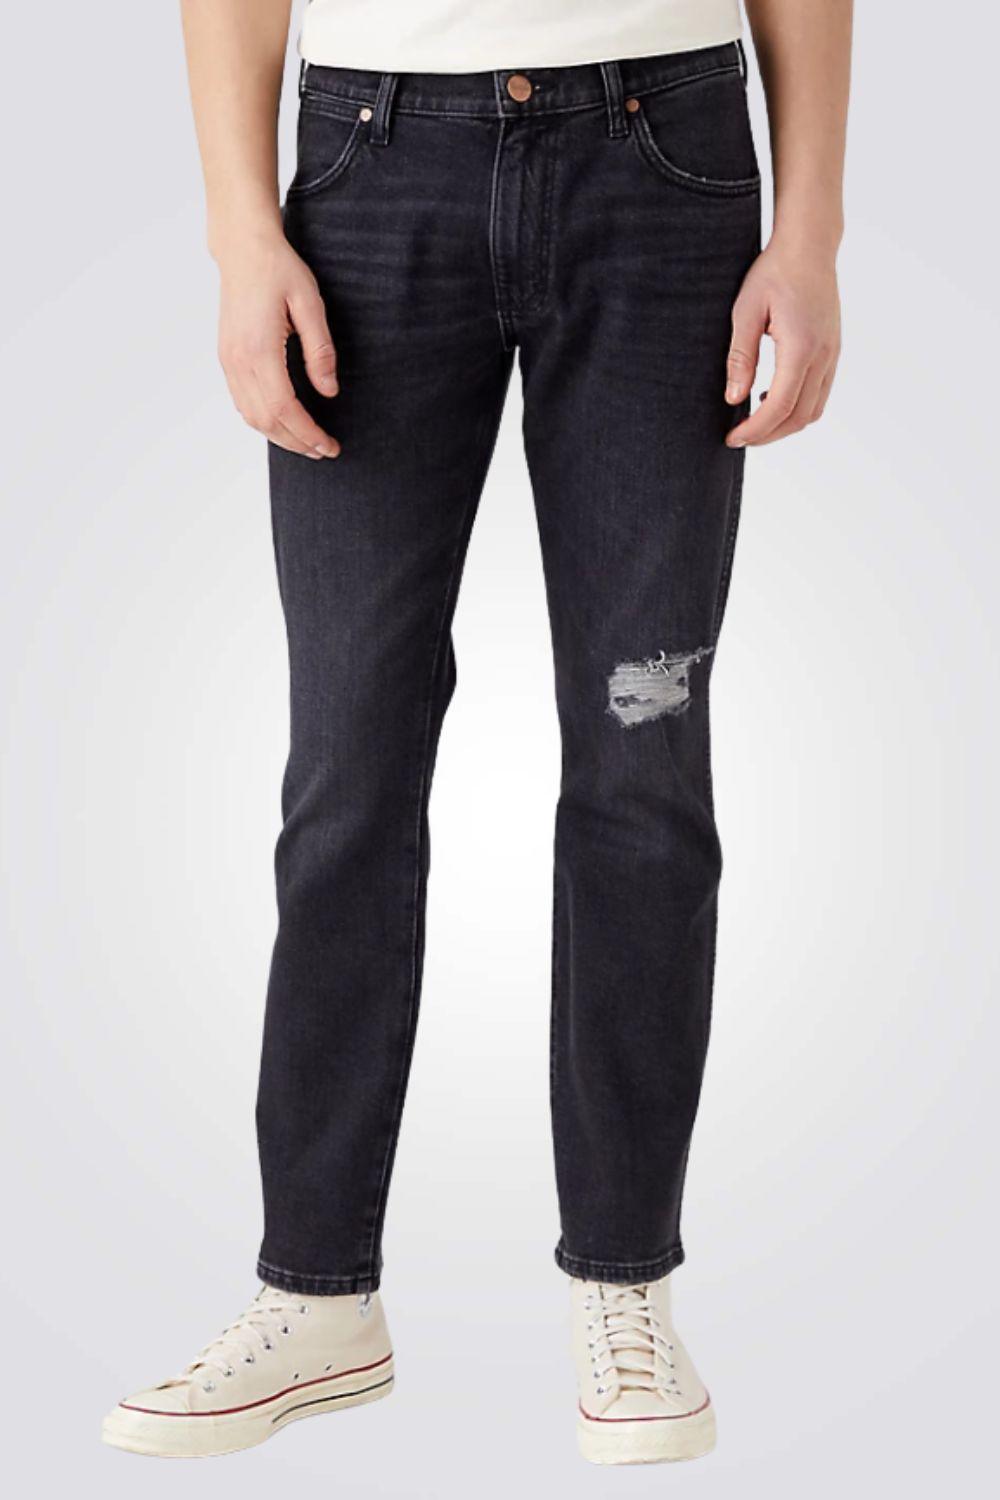 WRANGLER - ג'ינס AUTHENTIC בצבע שחור משופשף - MASHBIR//365